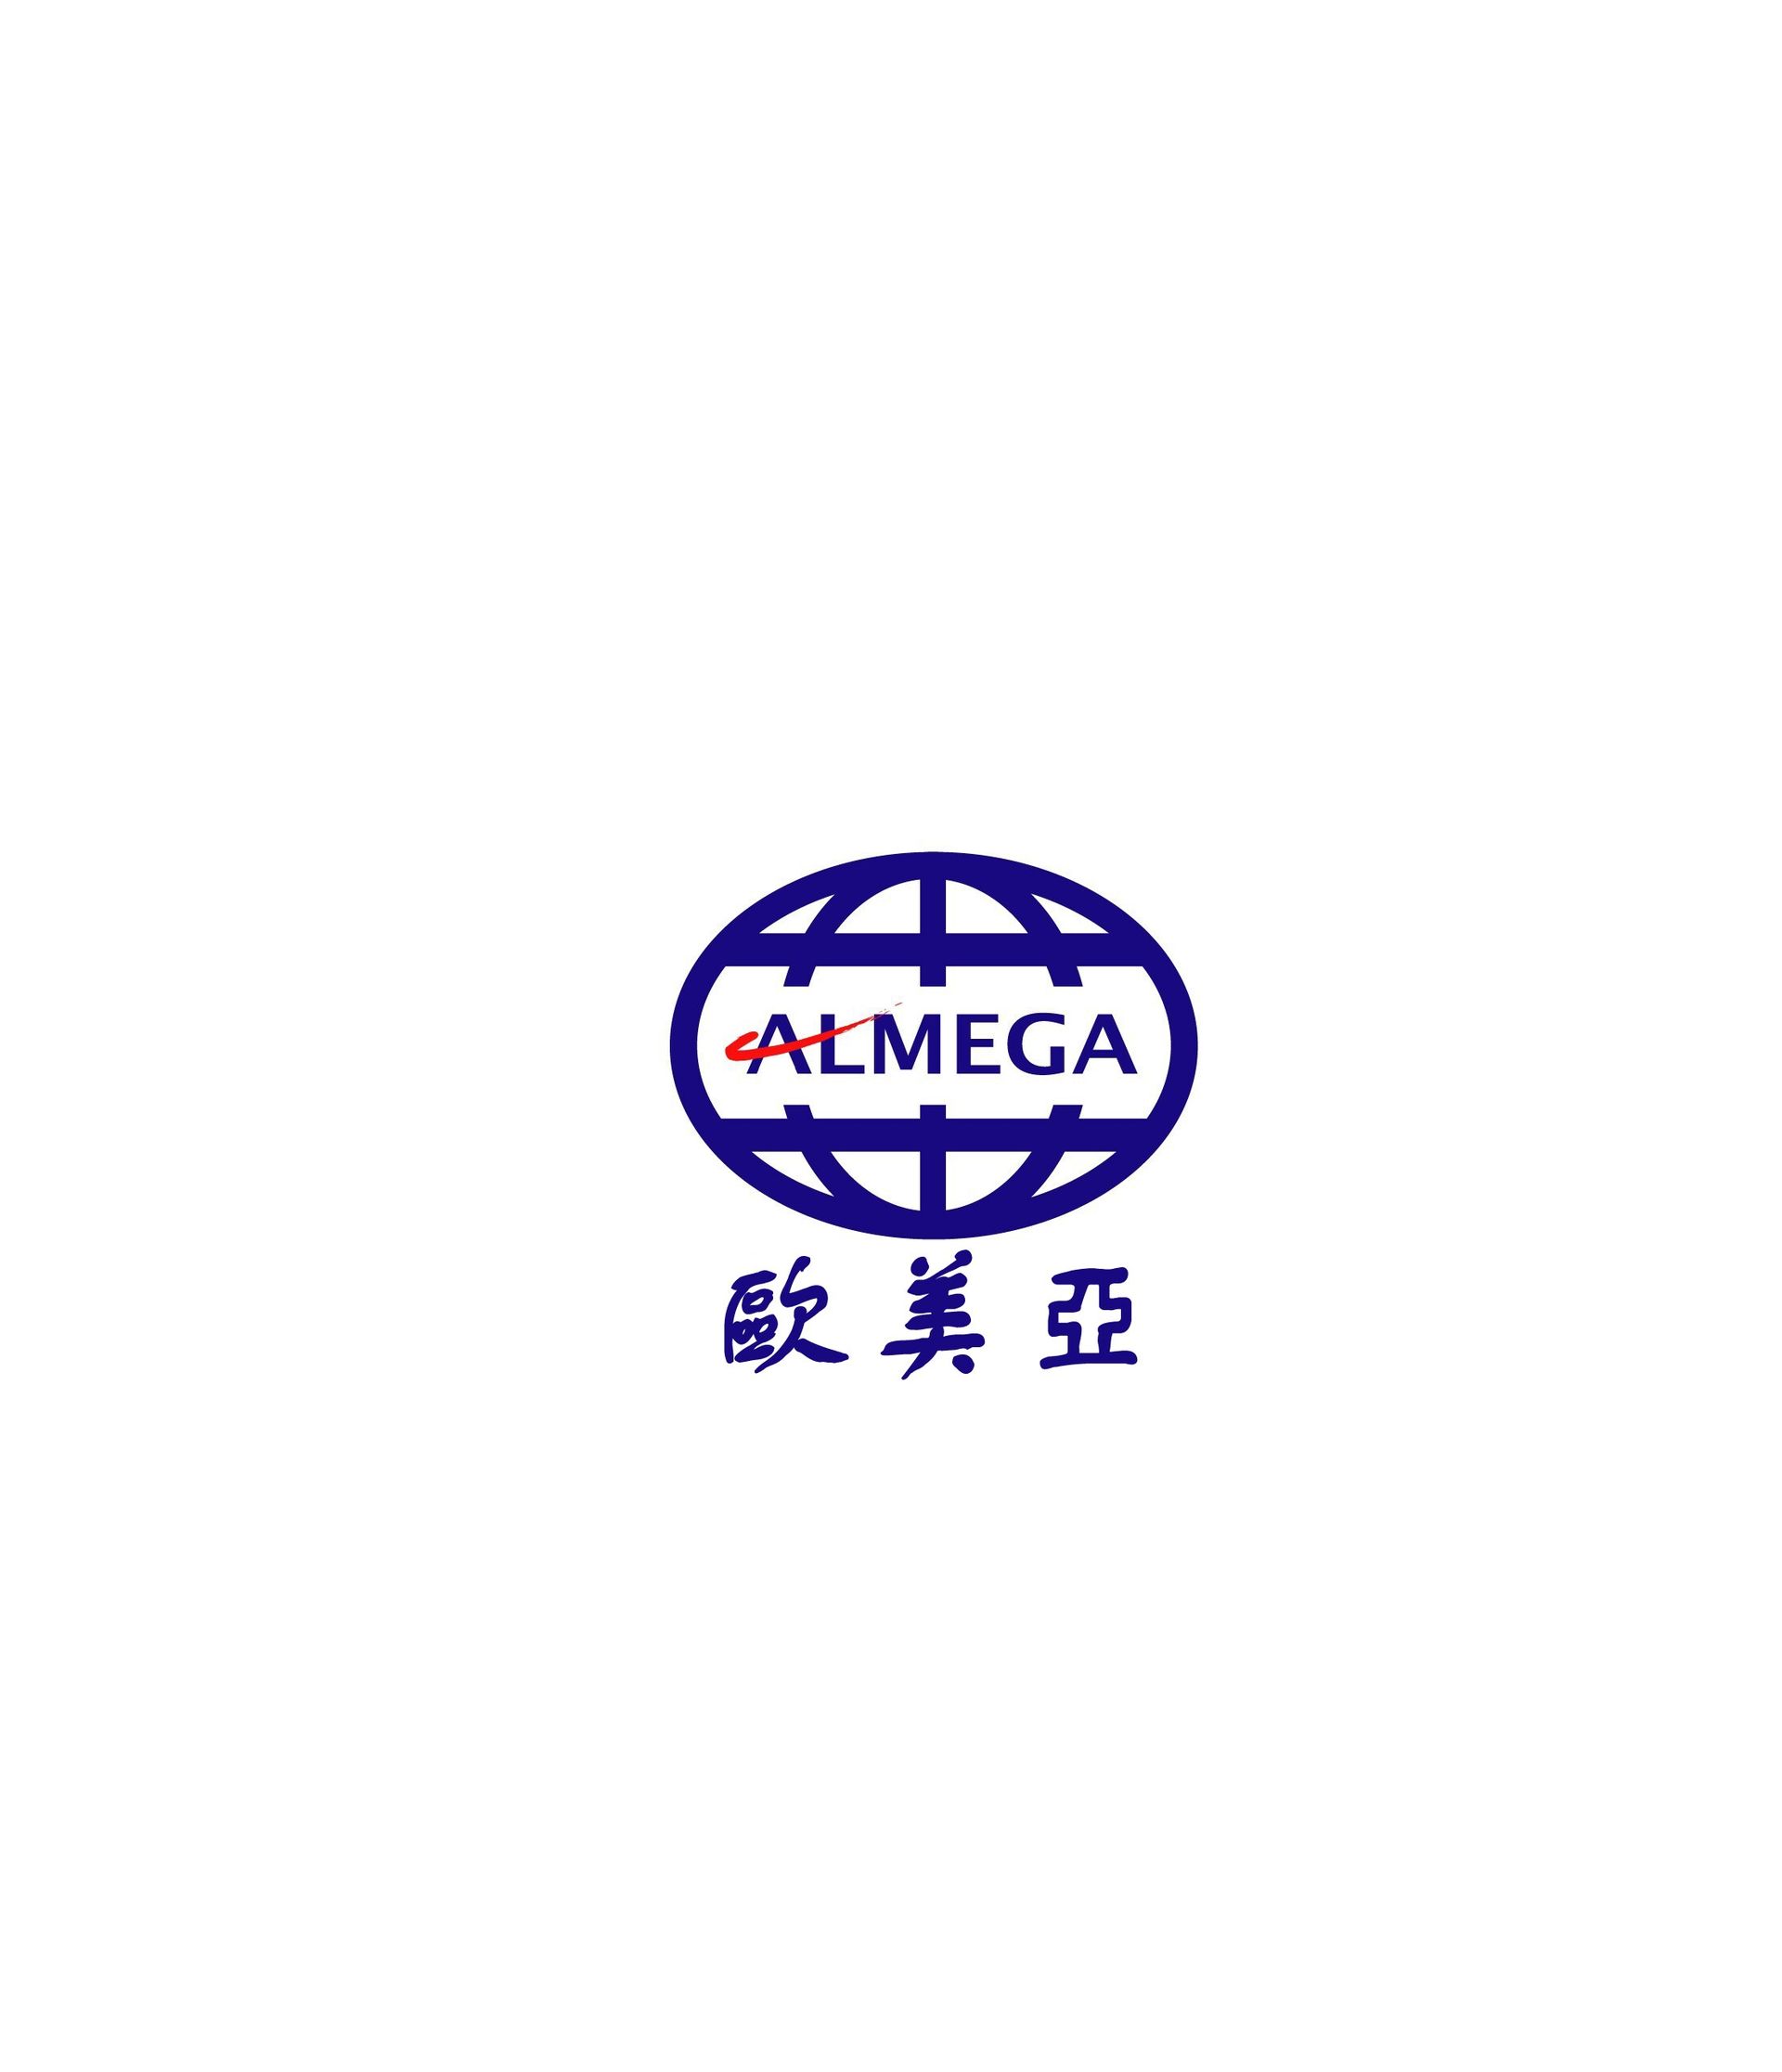 Almega Corporate Consultant Limited logo